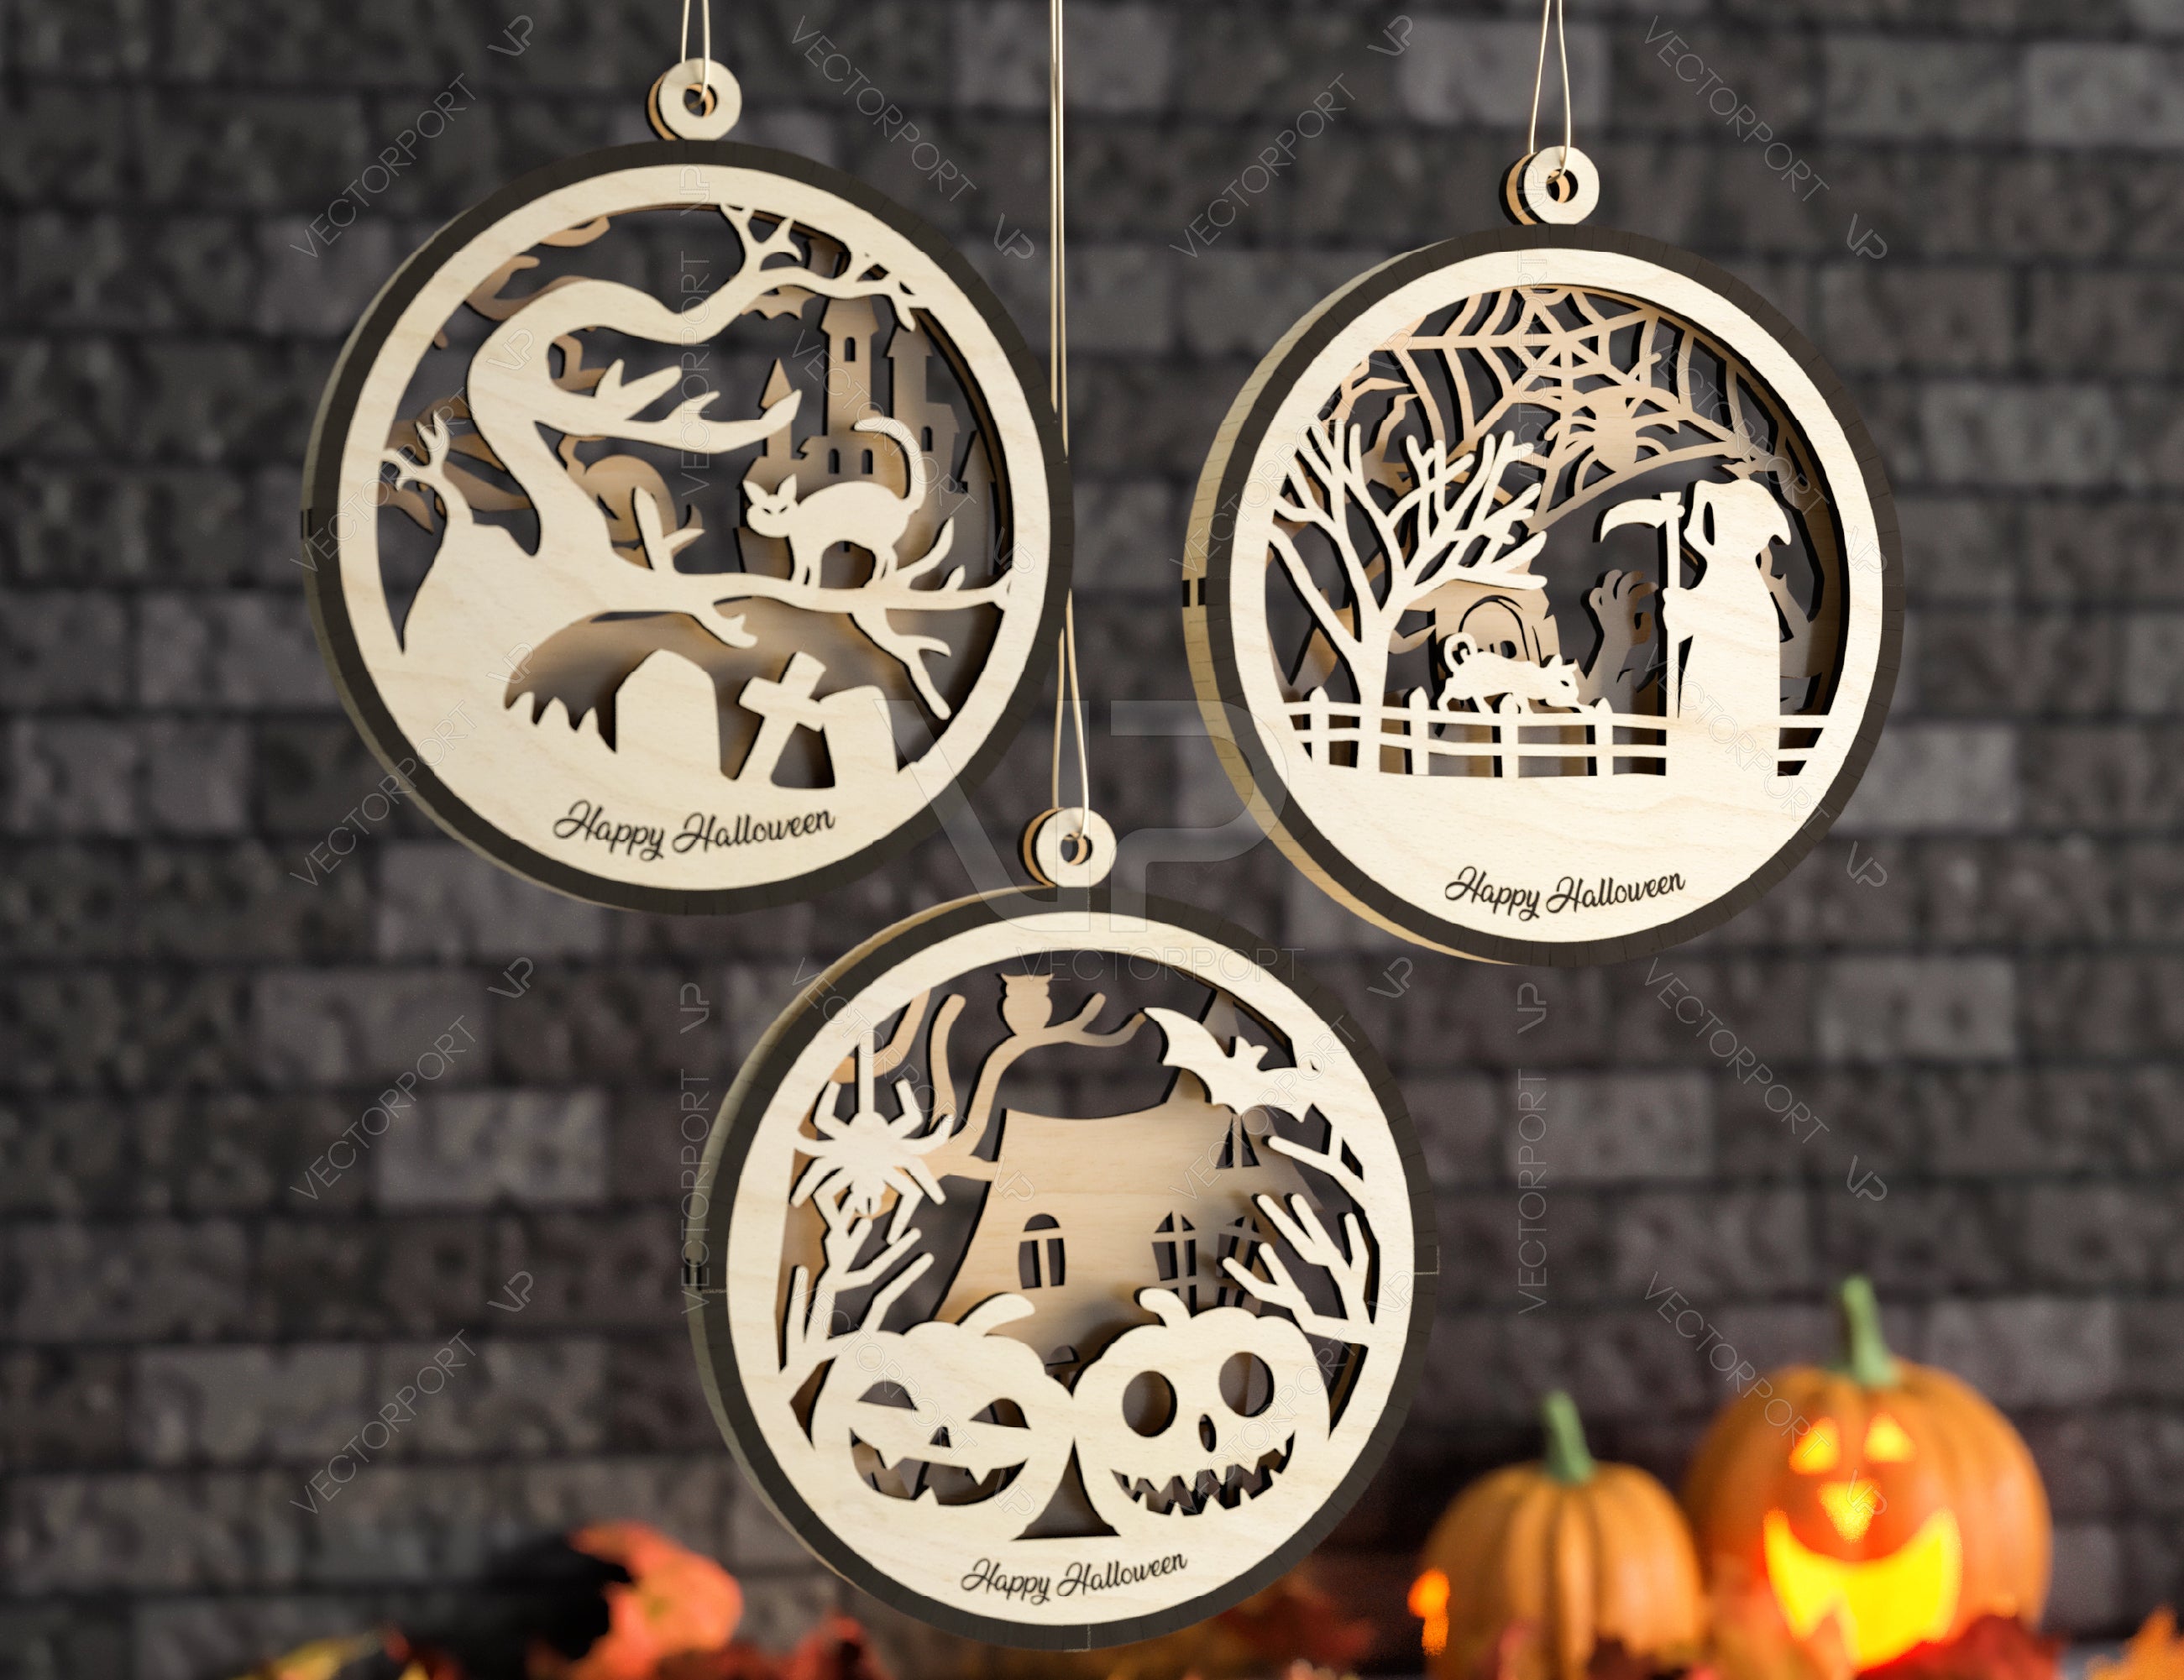 Halloween Bundle Decoration Balls Craft Hanging Bauble Pumpkin Cat Spider Lantern Spooky Scene Digital Download |#U290|